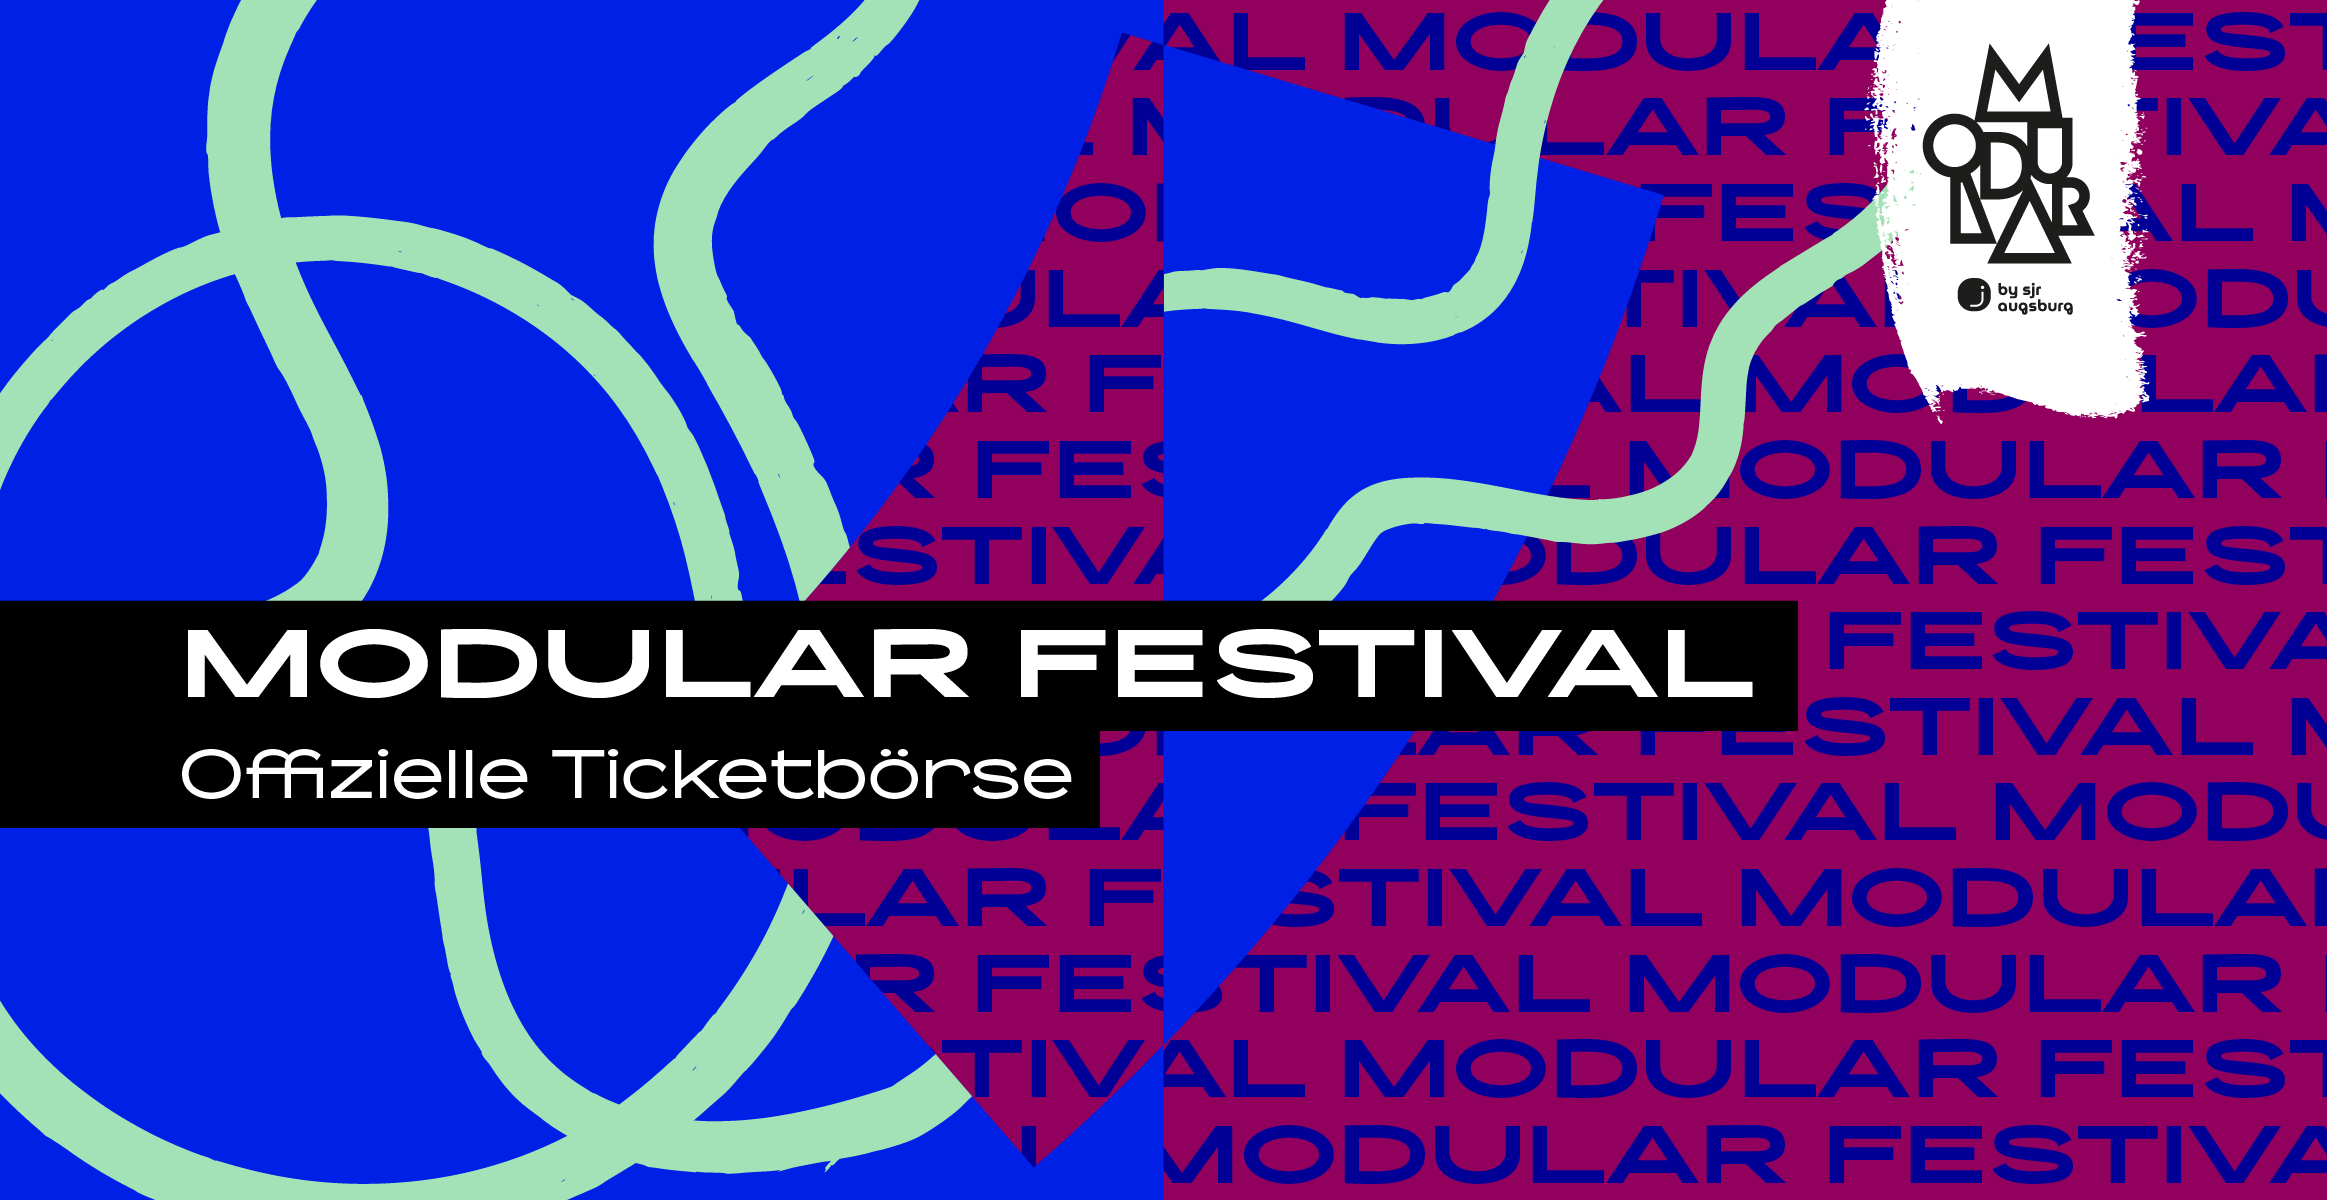 Modular Festival Ticketbörse